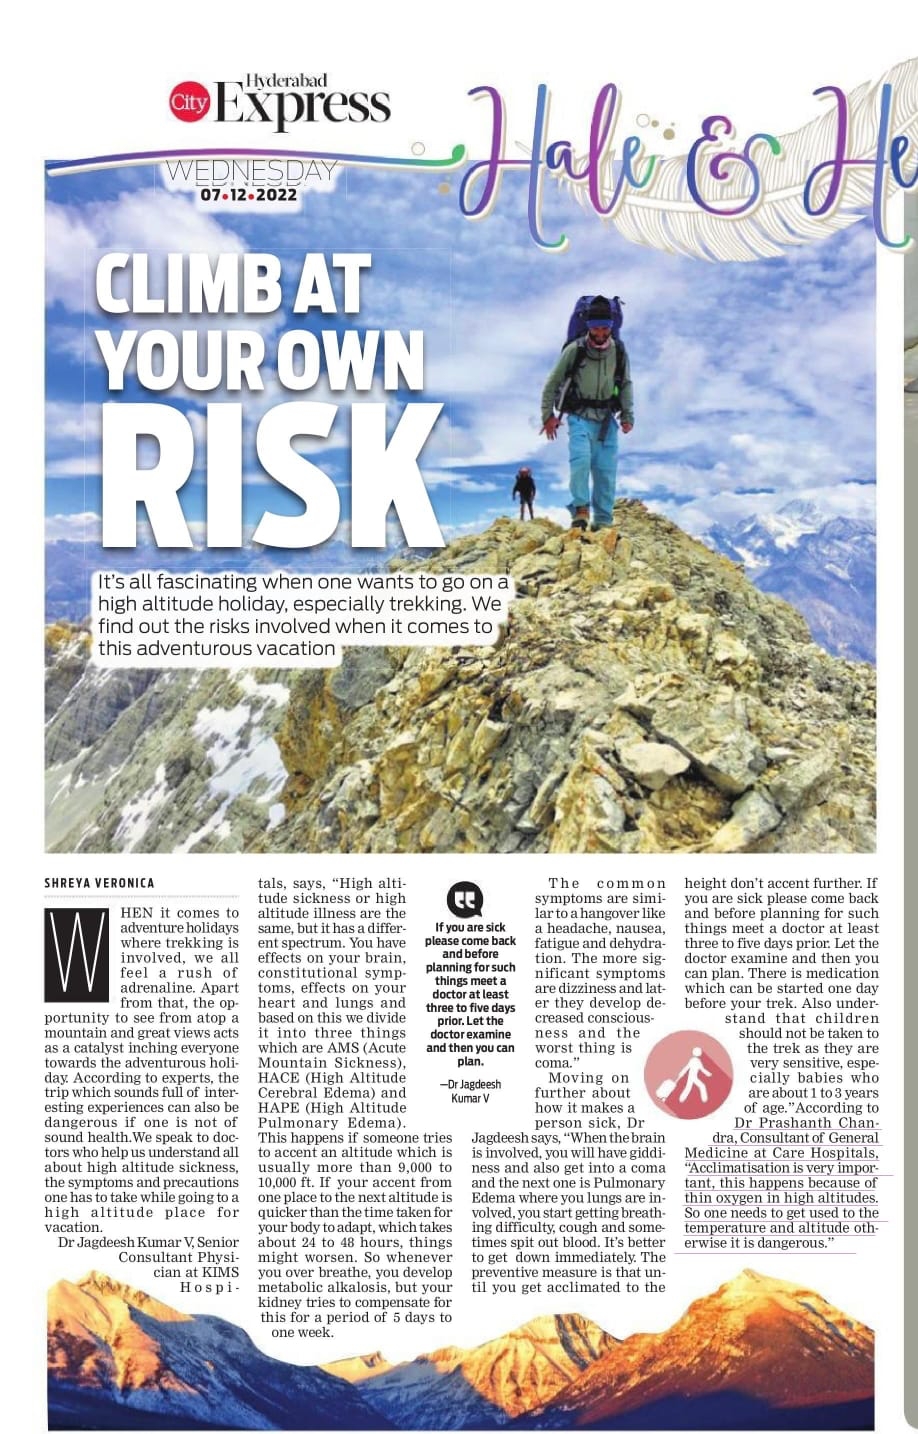 Risks on Adventurous Vacation By Dr. Prashanth Chandra